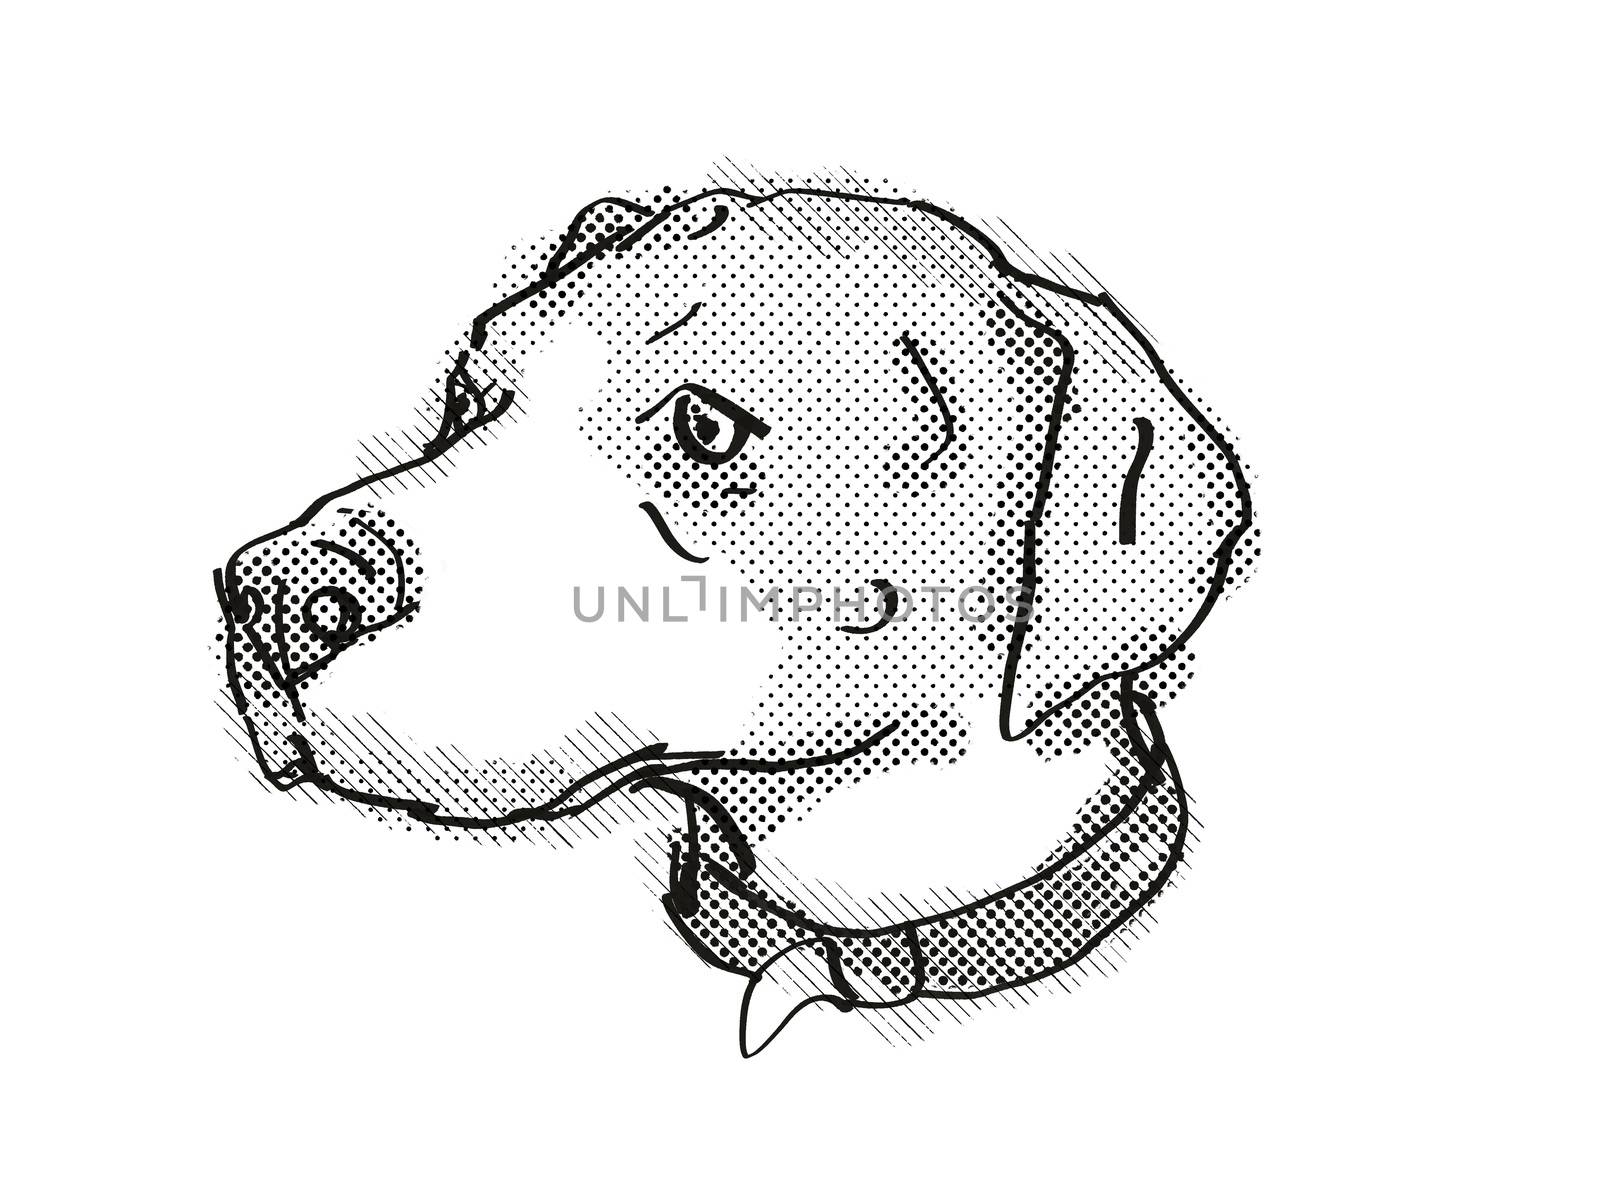 English Foxhound Dog Breed Cartoon Retro Drawing by patrimonio